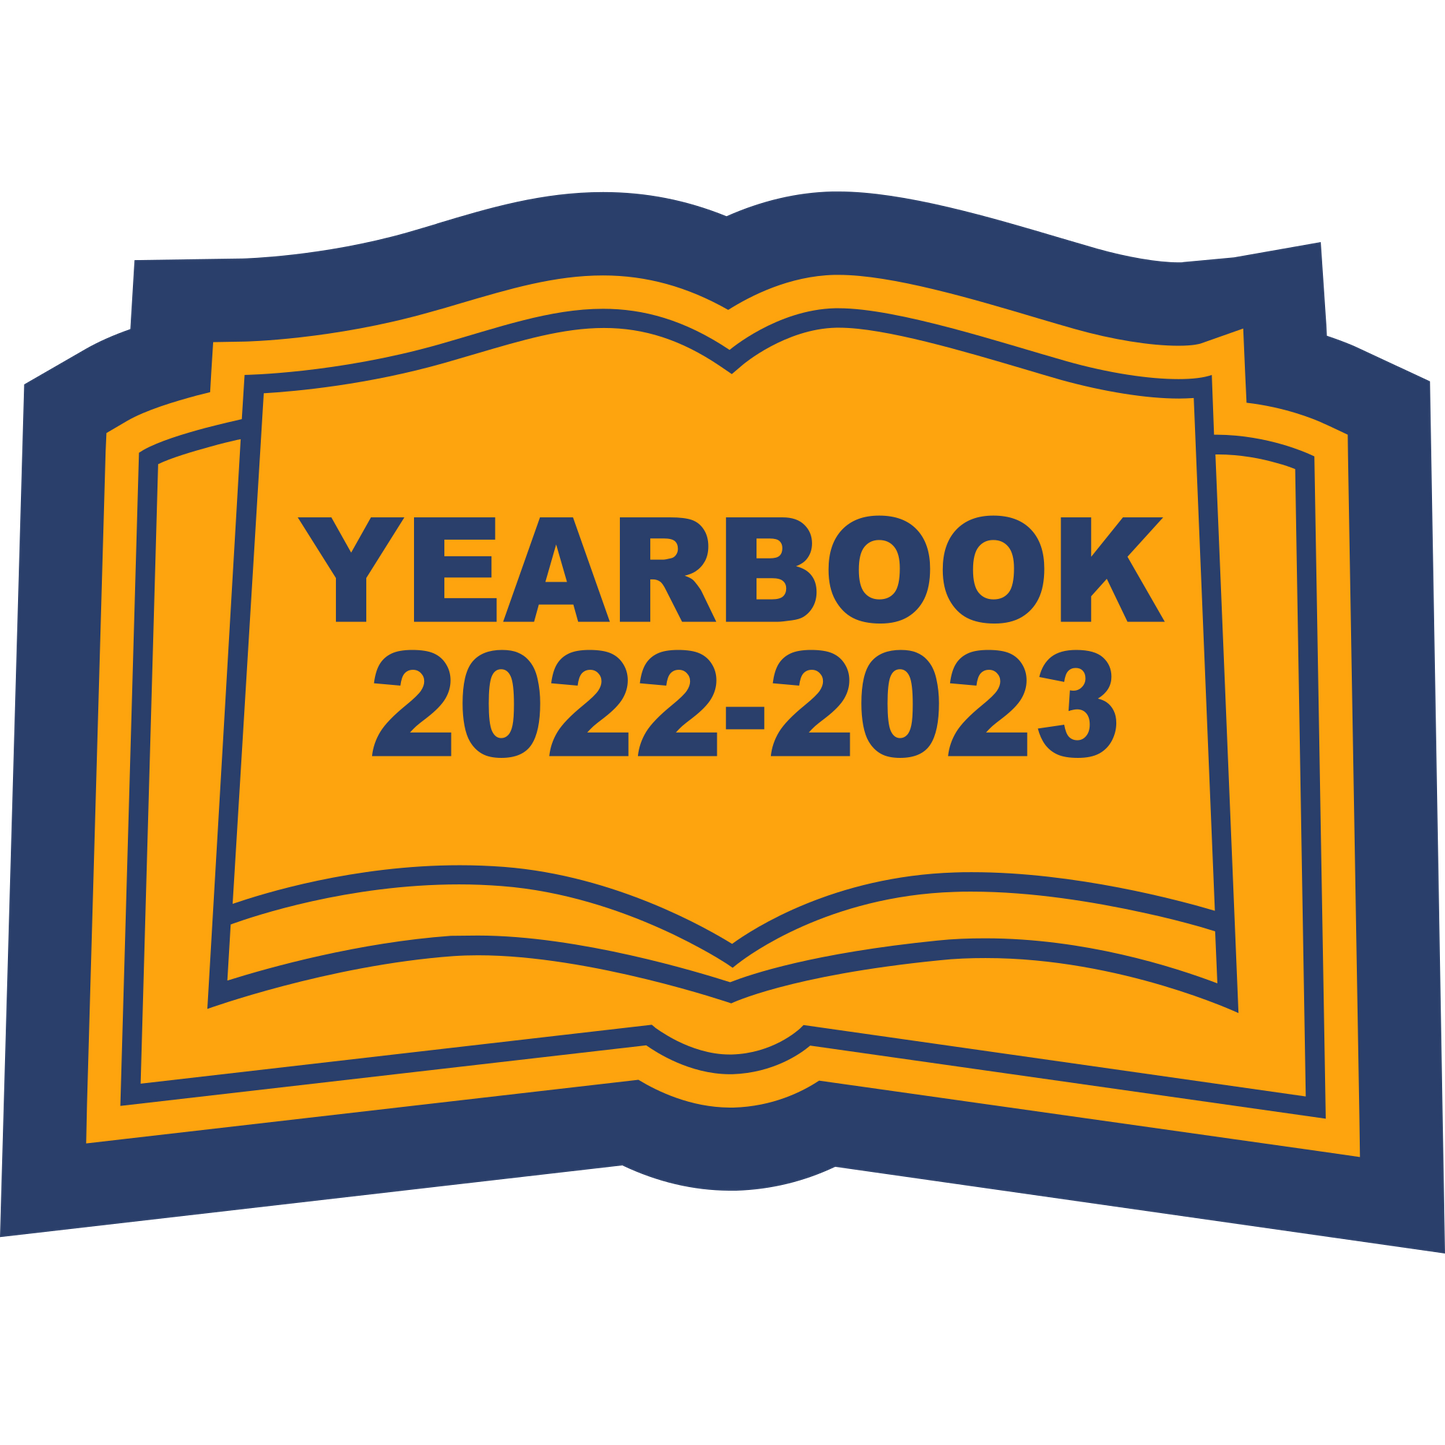 YRBOOK - Yearbook Sleeve Patch